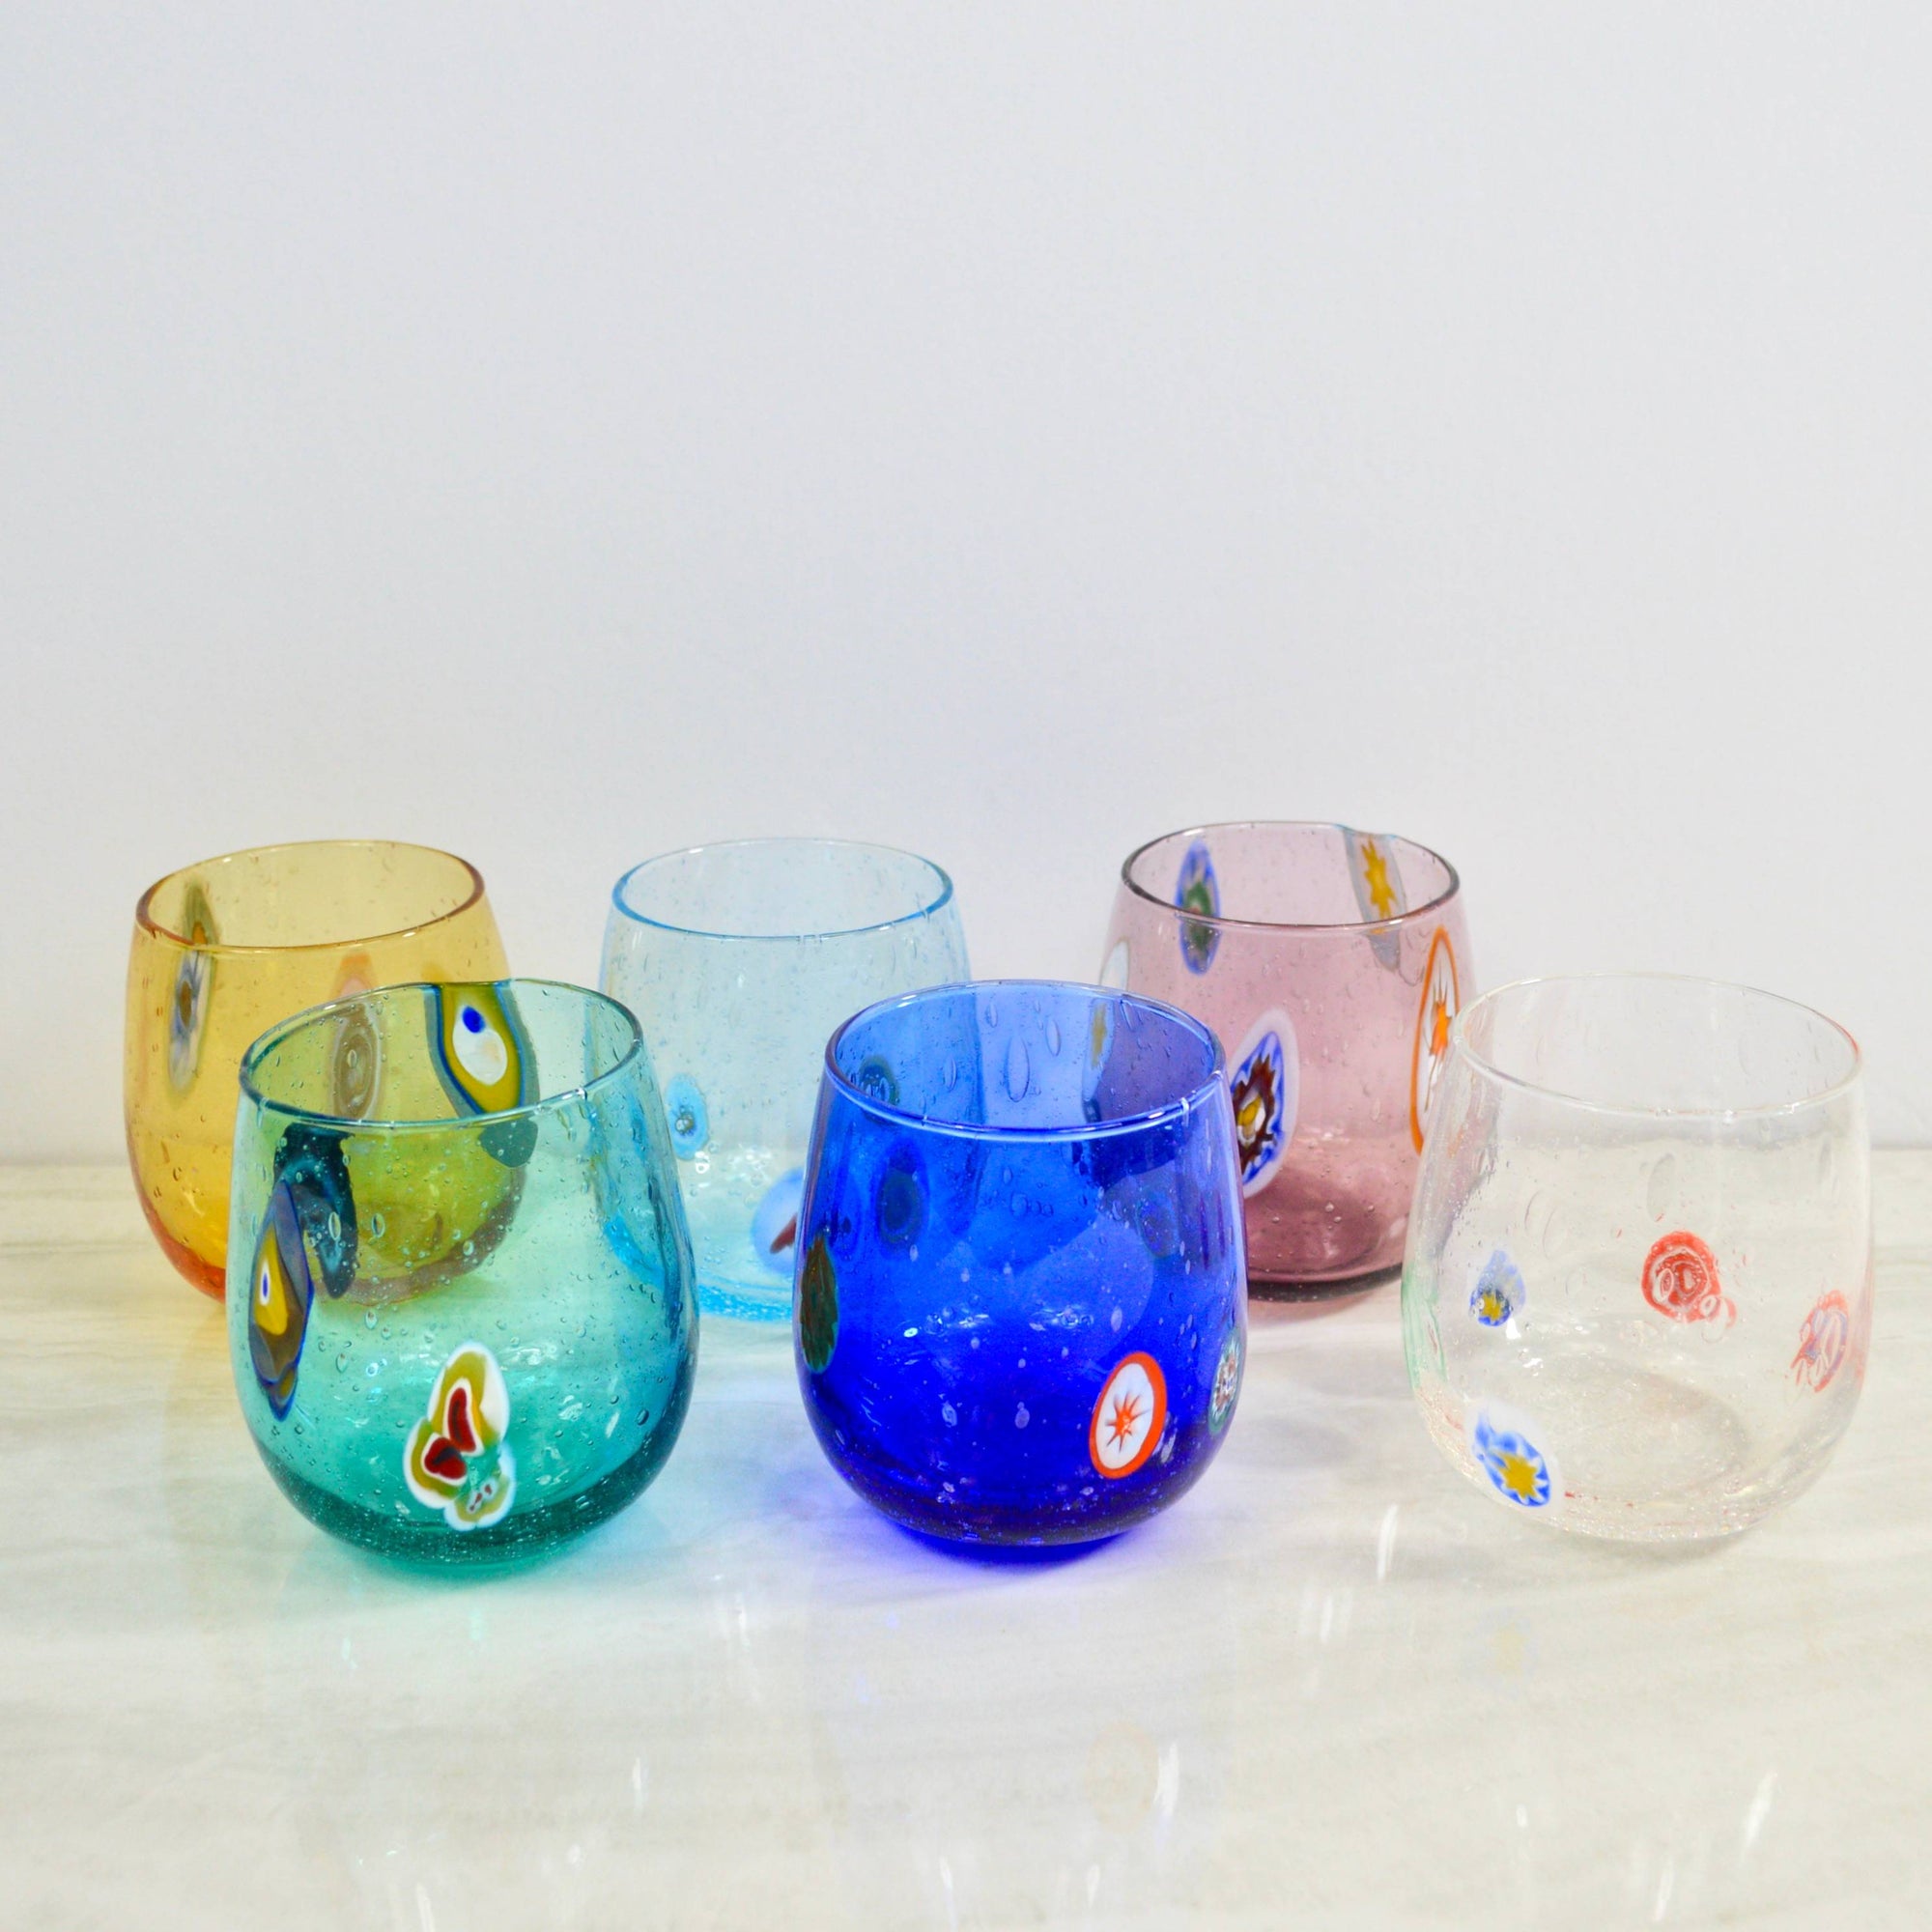 Serena Murano Glass Drinking Glasses, Set of 6, Made in Italy - My Italian Decor